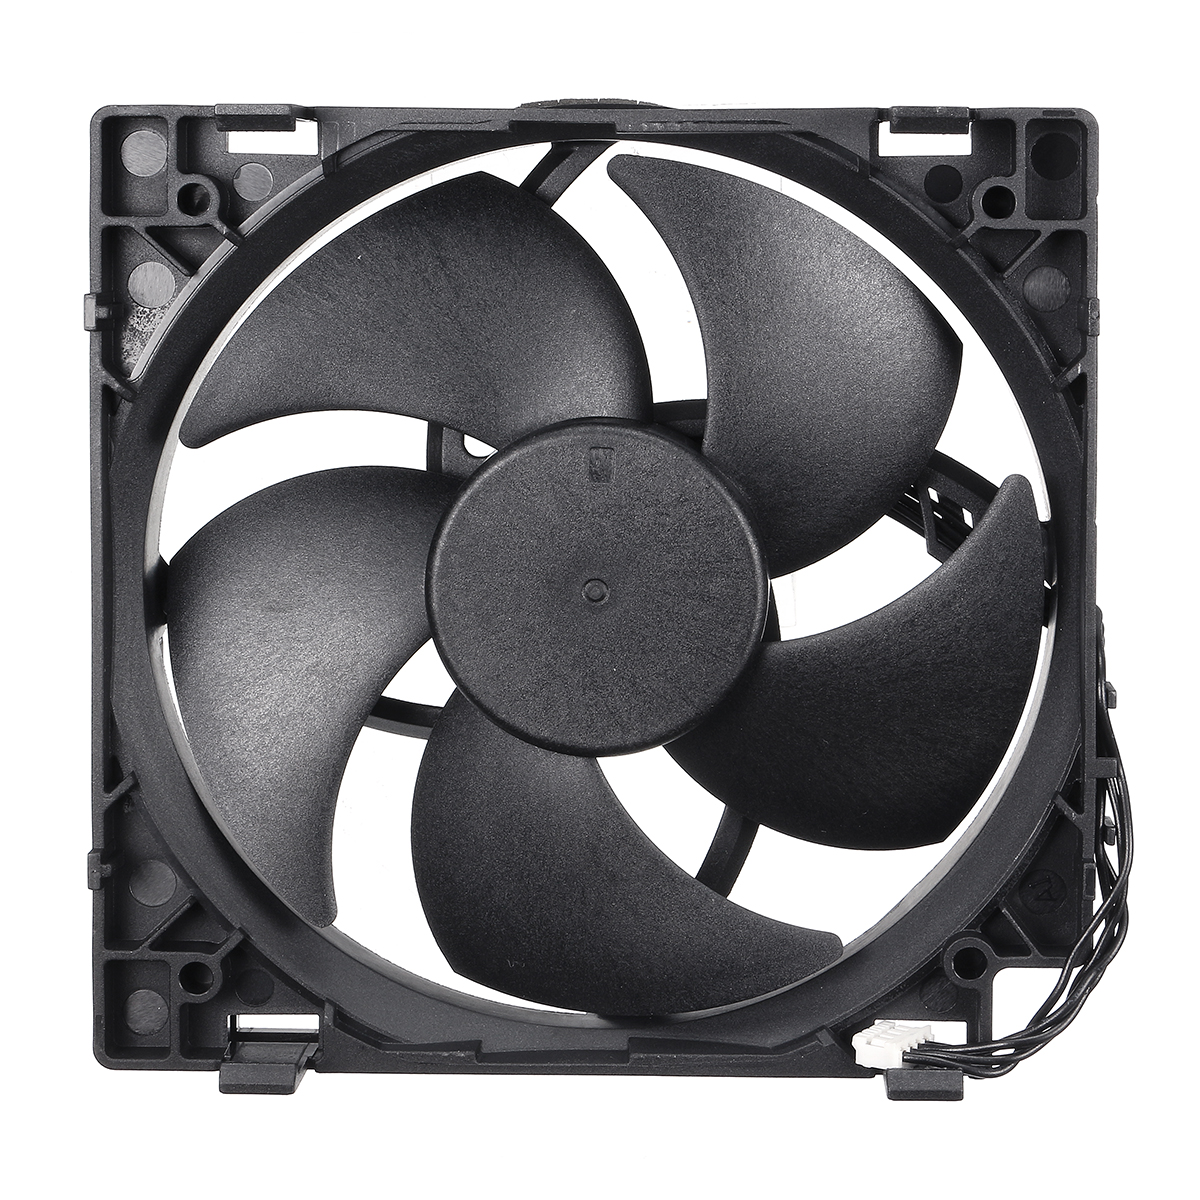 oling Fan External Side Cooler for XBOX 360 S